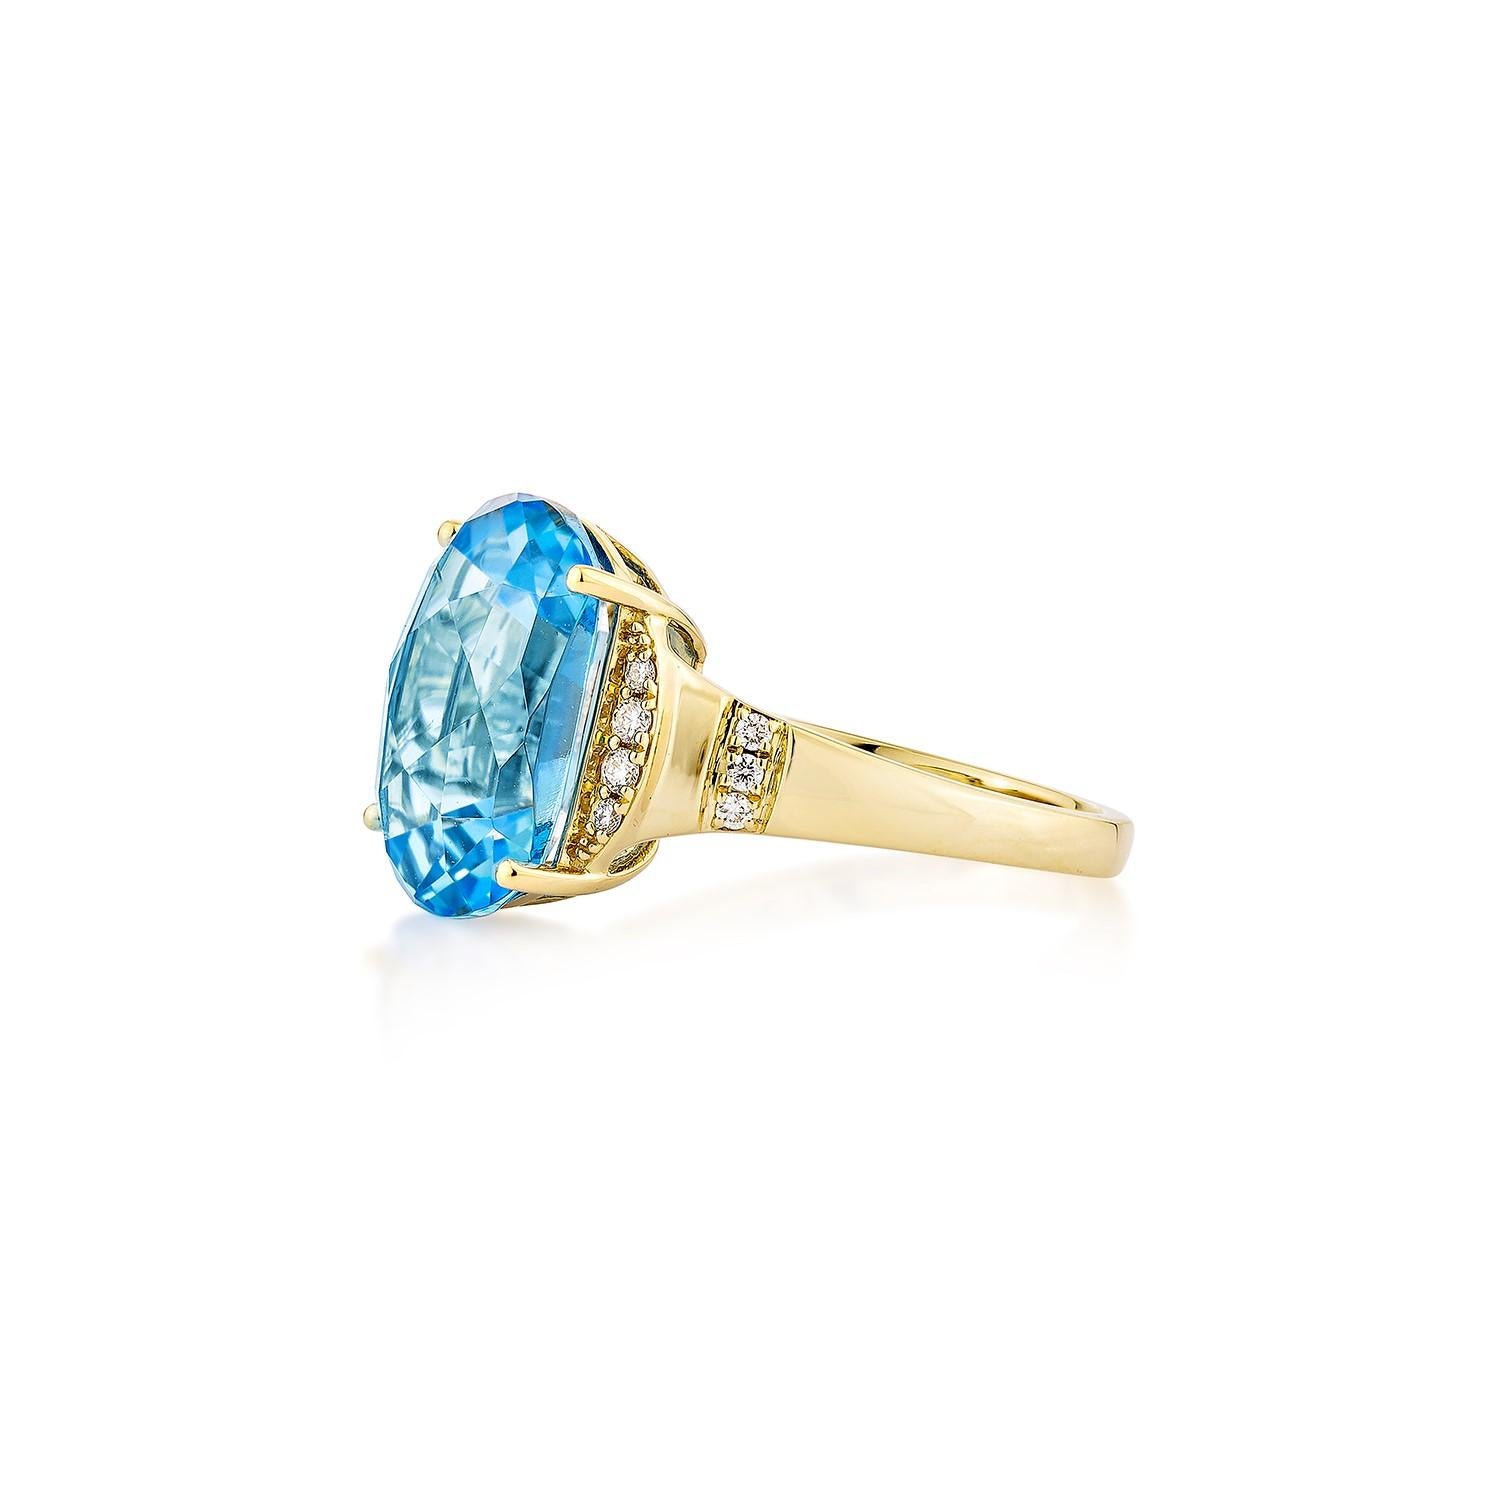 Oval Cut 7.66 Carat Swiss Blue Topaz Fancy Ring in 18Karat Yellow Gold with Diamond. For Sale